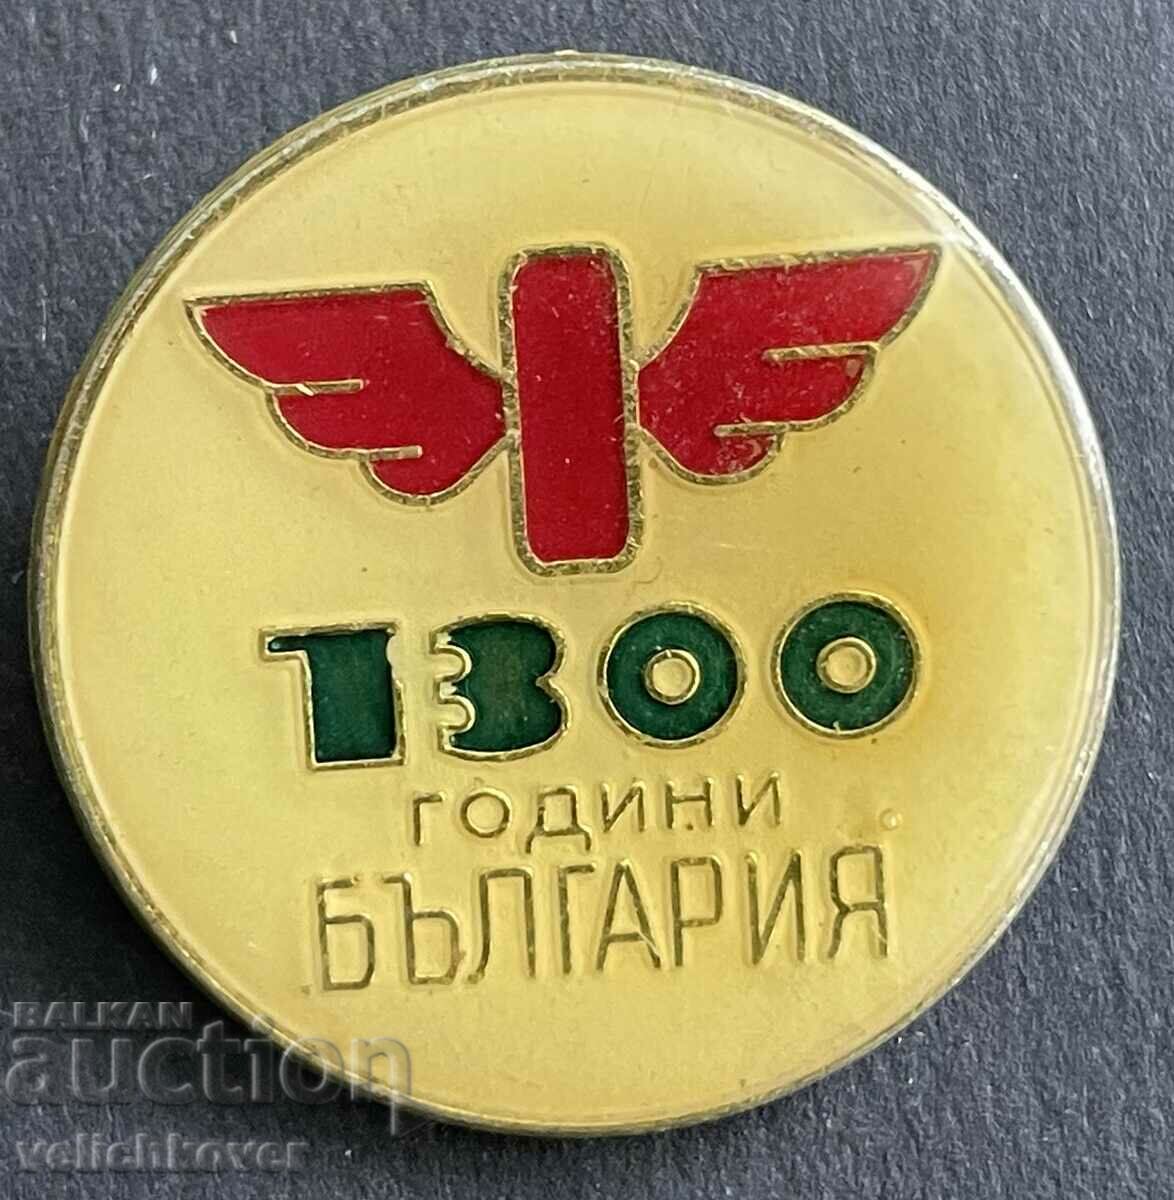 37758 България знак БДЖ Български държавни железници 1300г.